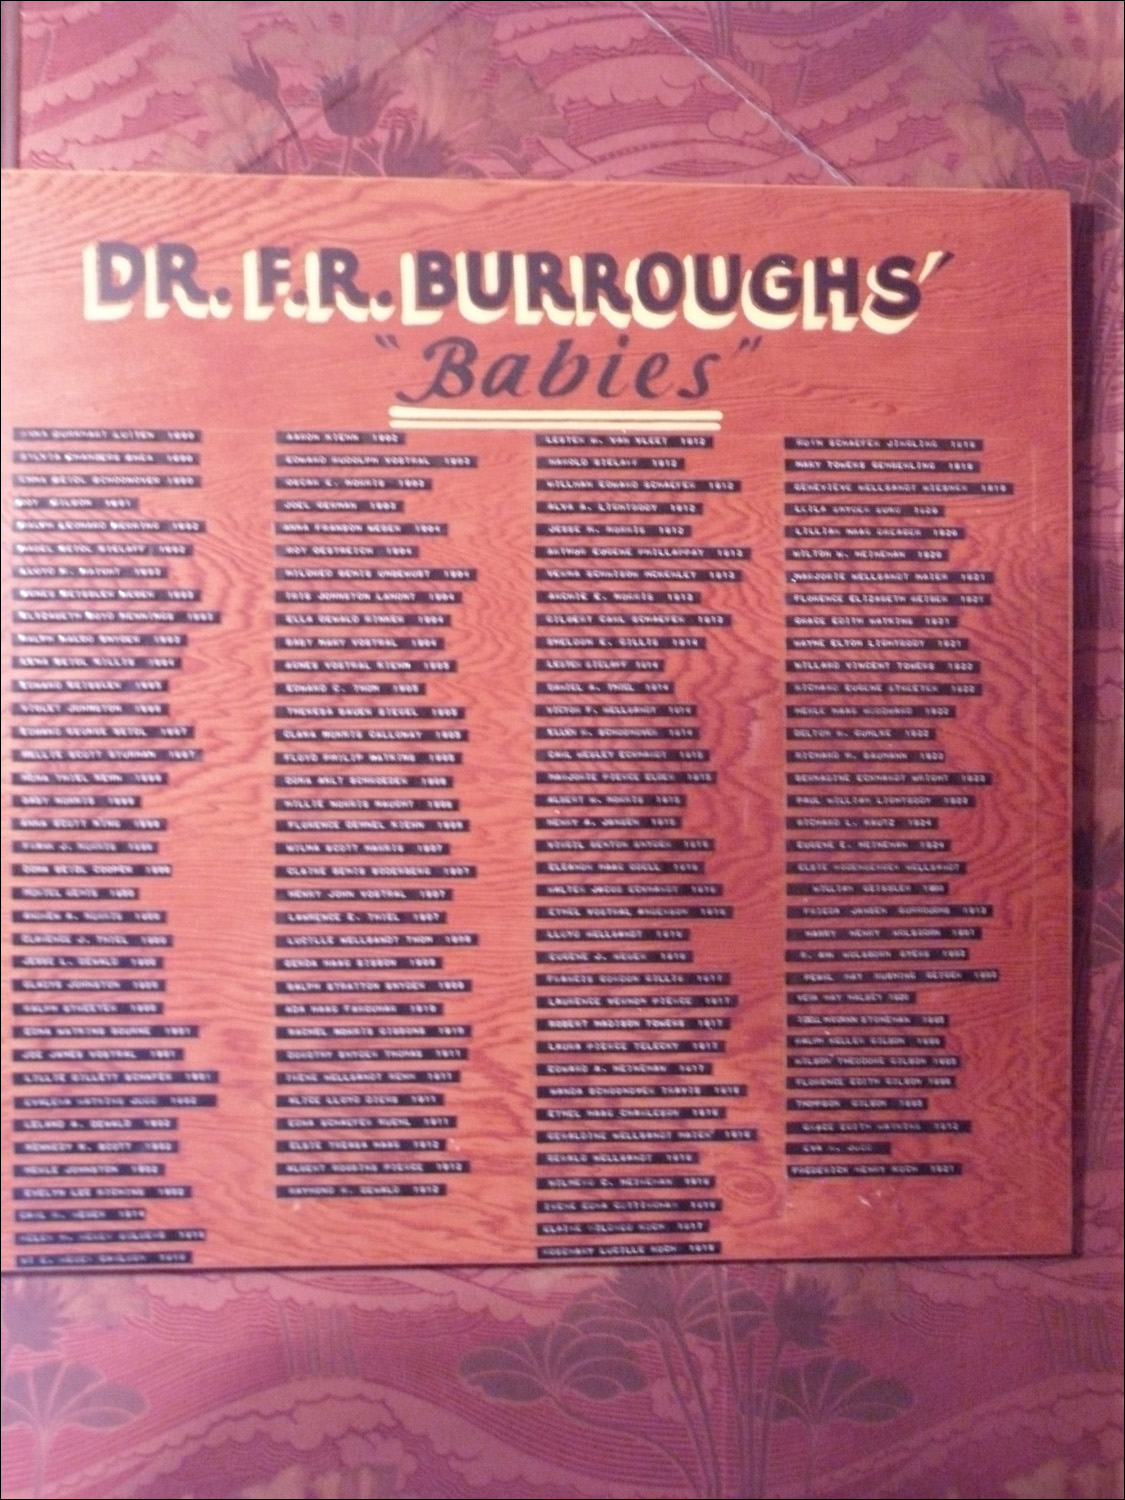 Ritzville, WA- Dr Burroughs home tour~listing of Dr. Burroughs' deliveries